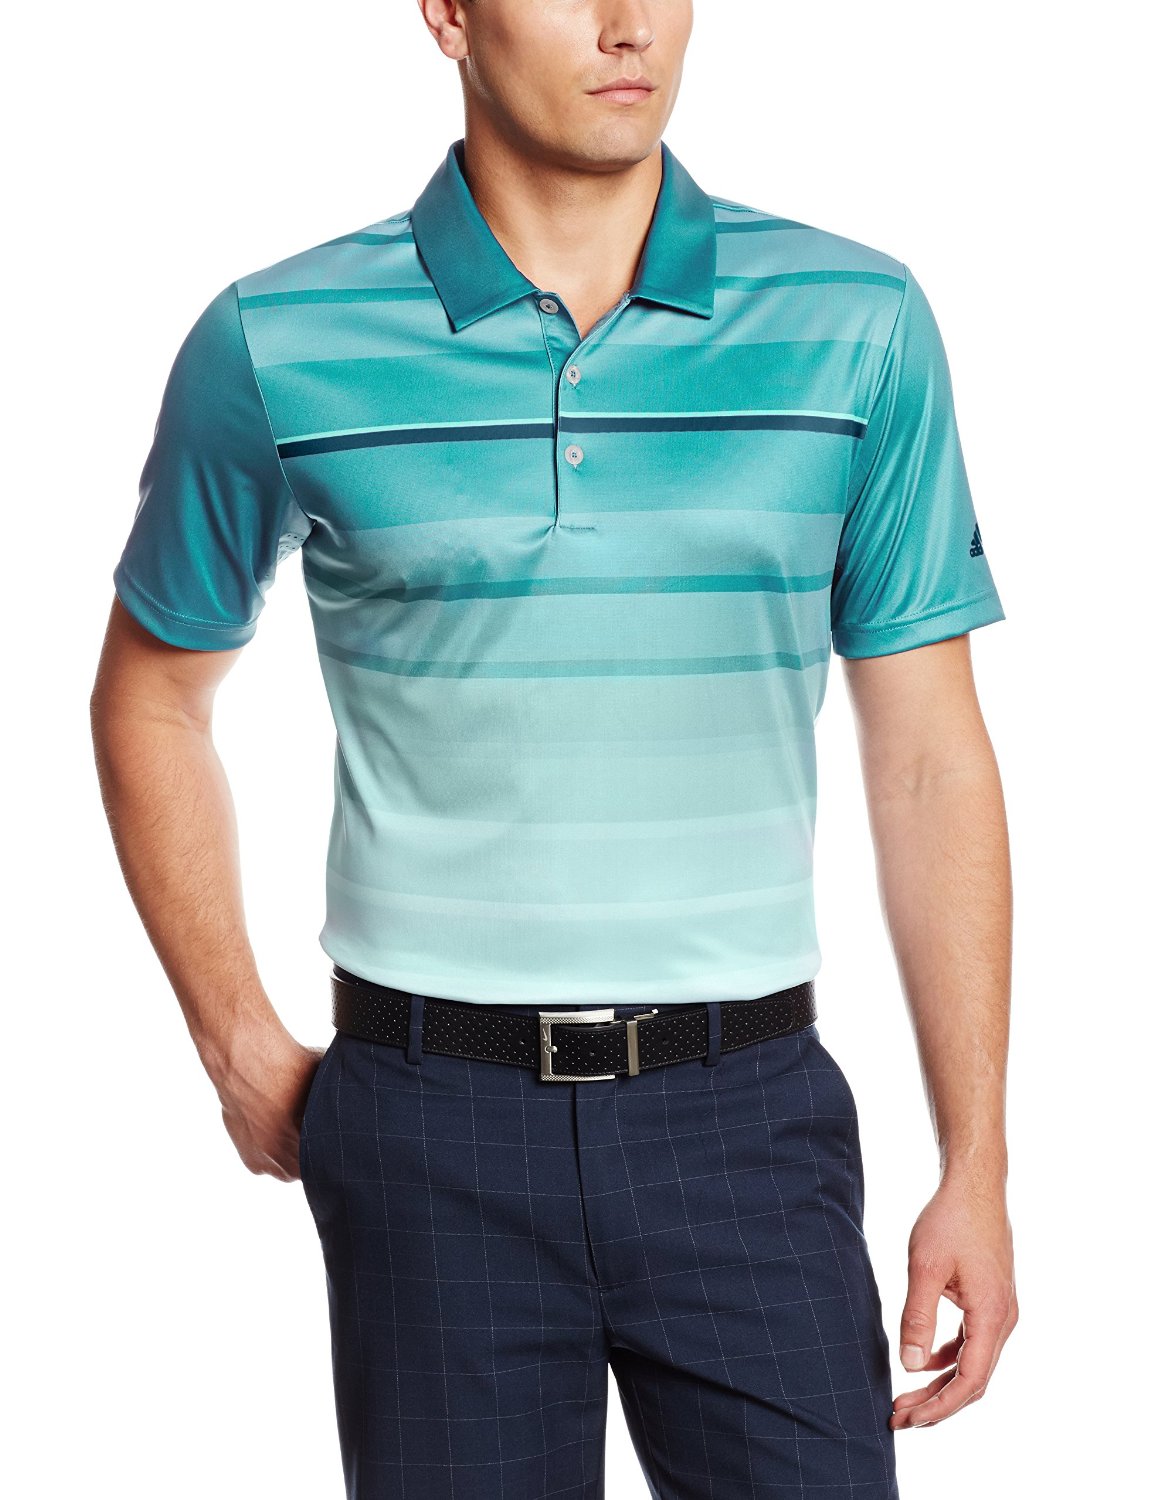 Adidas Puremotion Climacool Gradient Block Tour Golf Polo Shirts